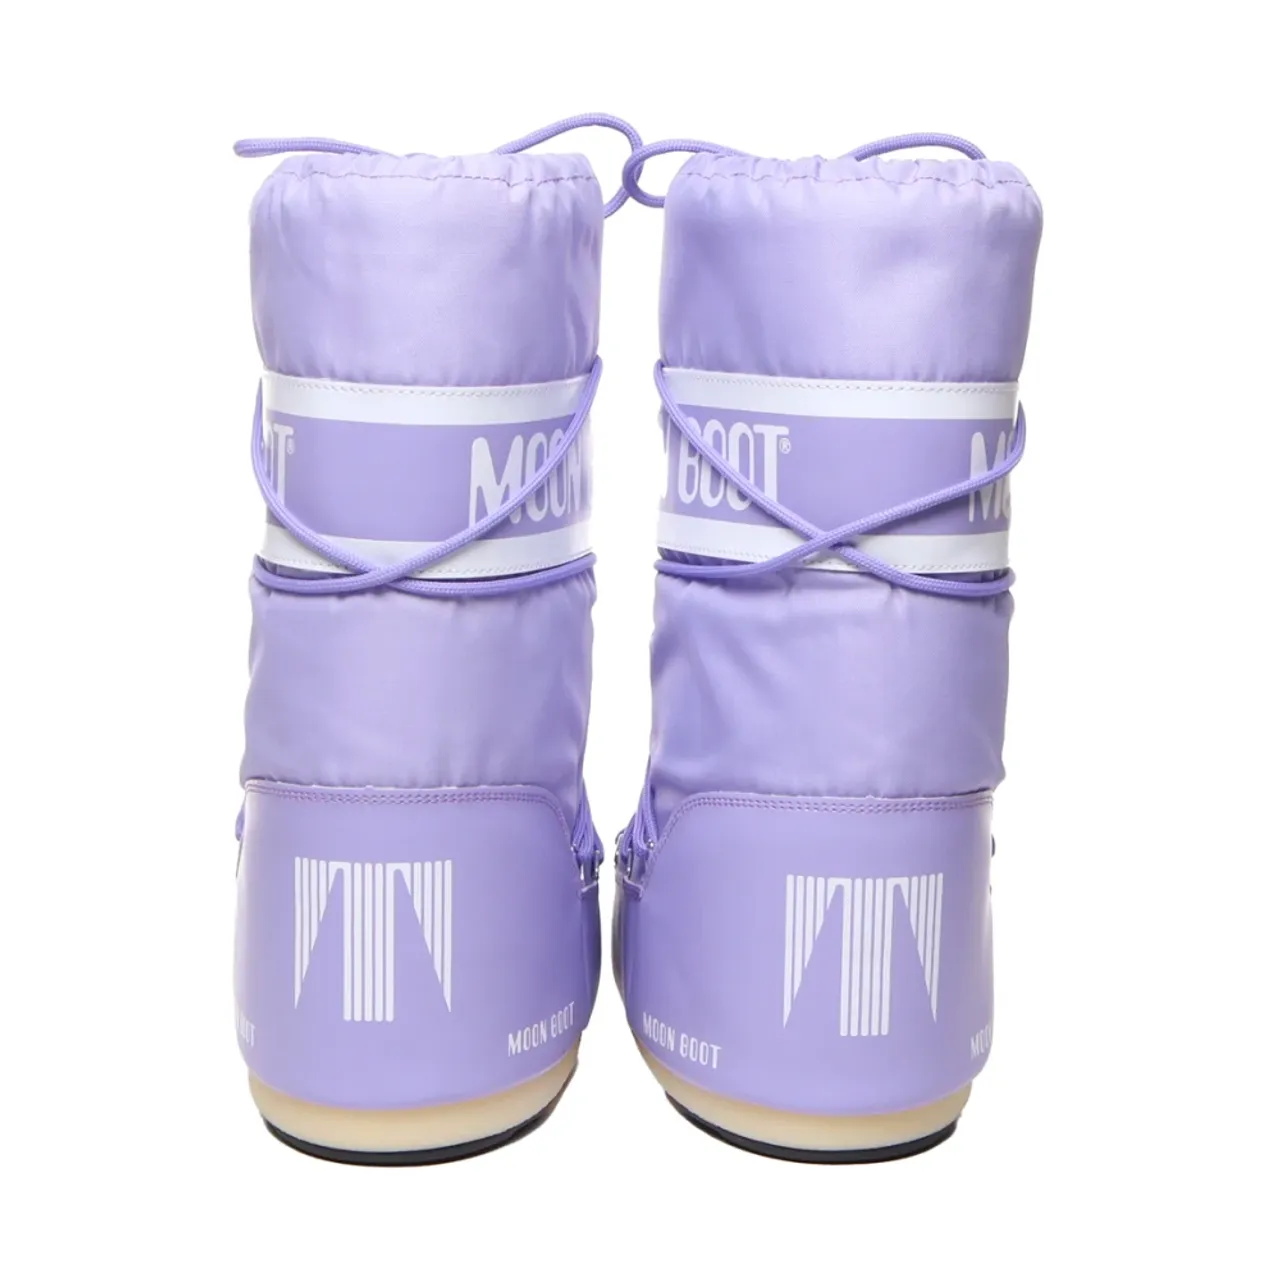 Moon Boot , Purple Waterproof Snow Boots ,Purple female, Sizes: